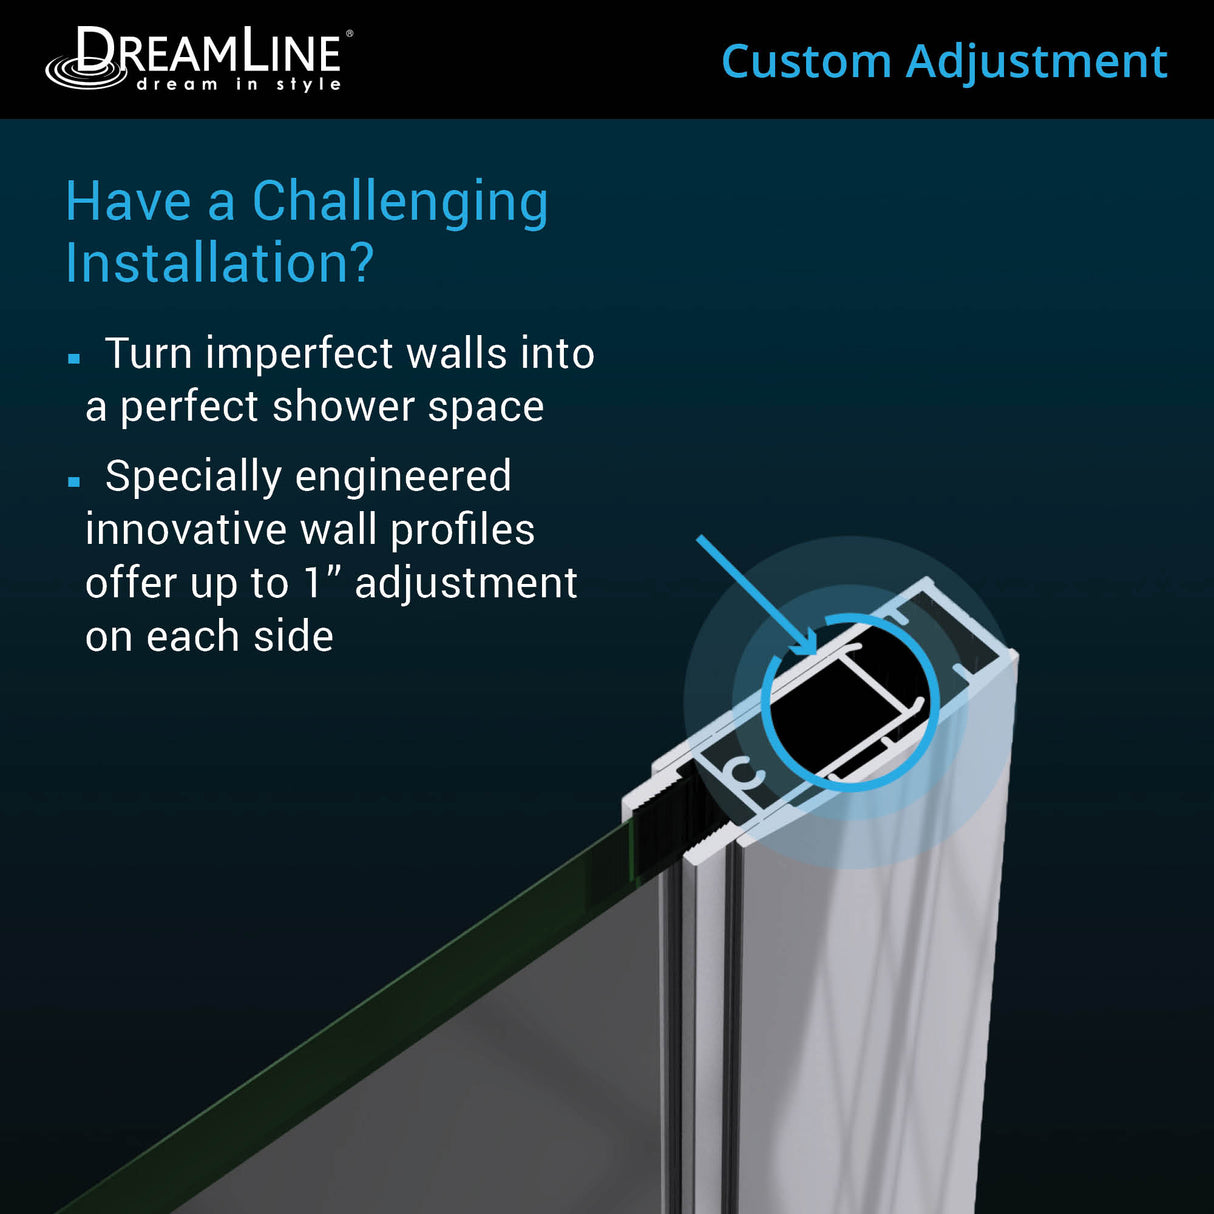 DreamLine Elegance-LS 32 3/4 - 34 3/4 in. W x 72 in. H Frameless Pivot Shower Door in Brushed Nickel